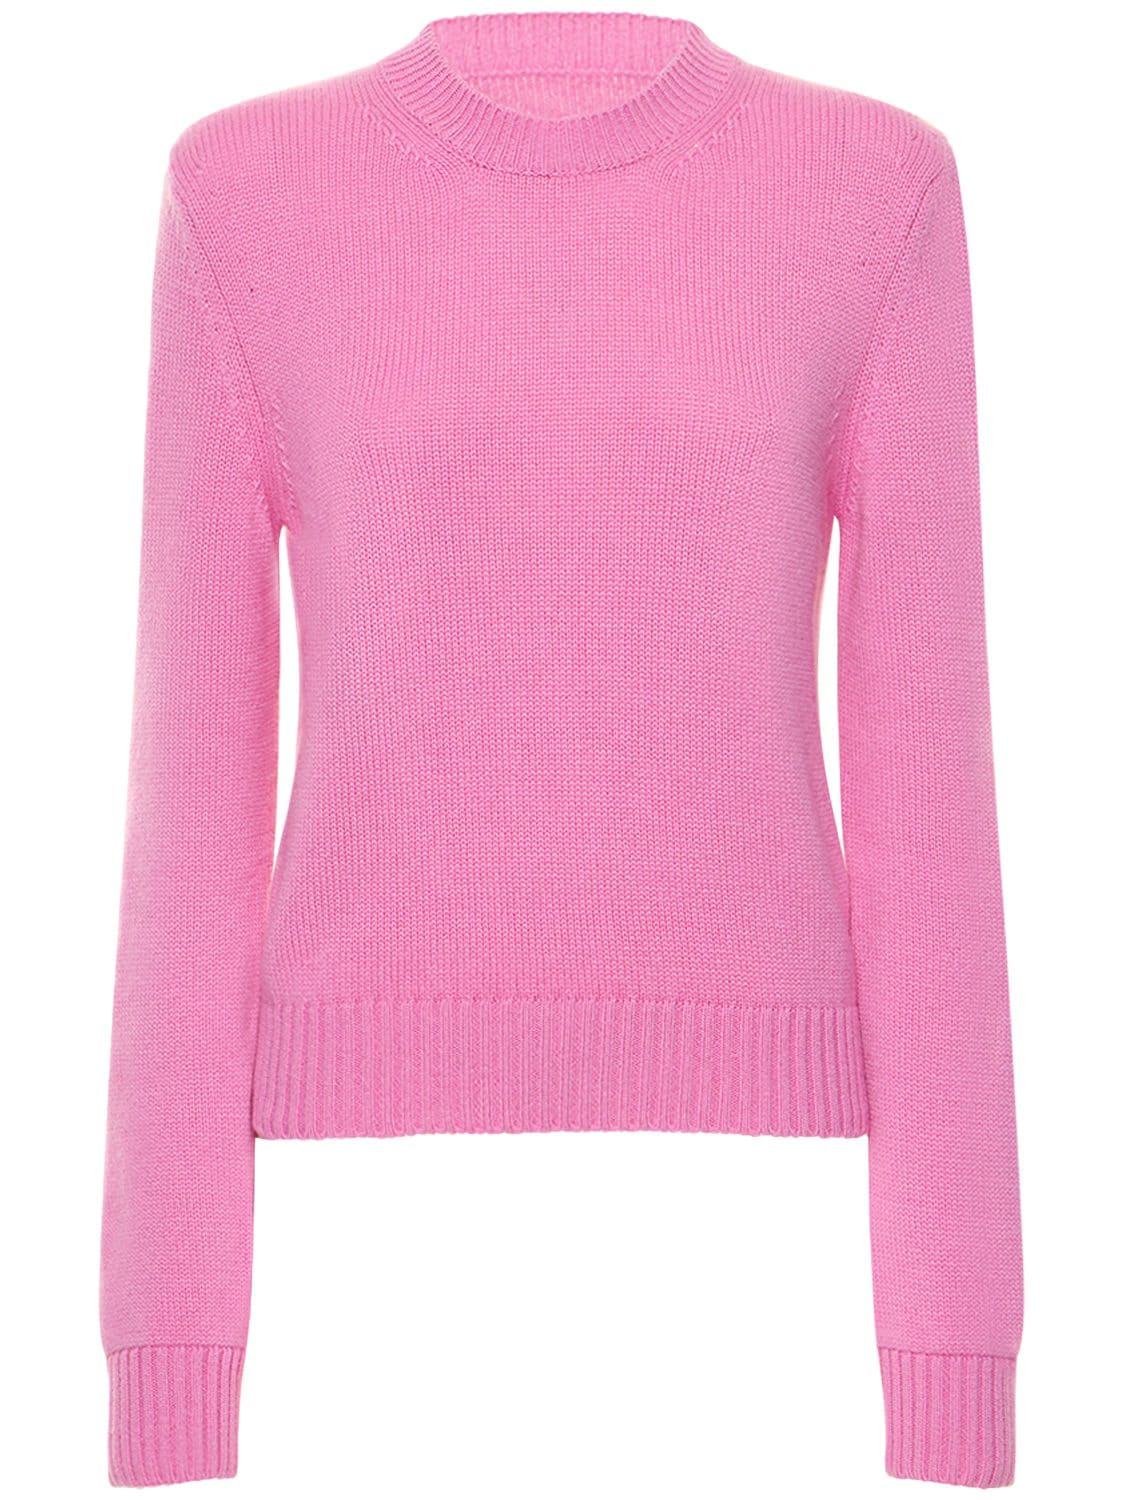 Annagreta Marina Cashmere Crewneck Sweater In Pink